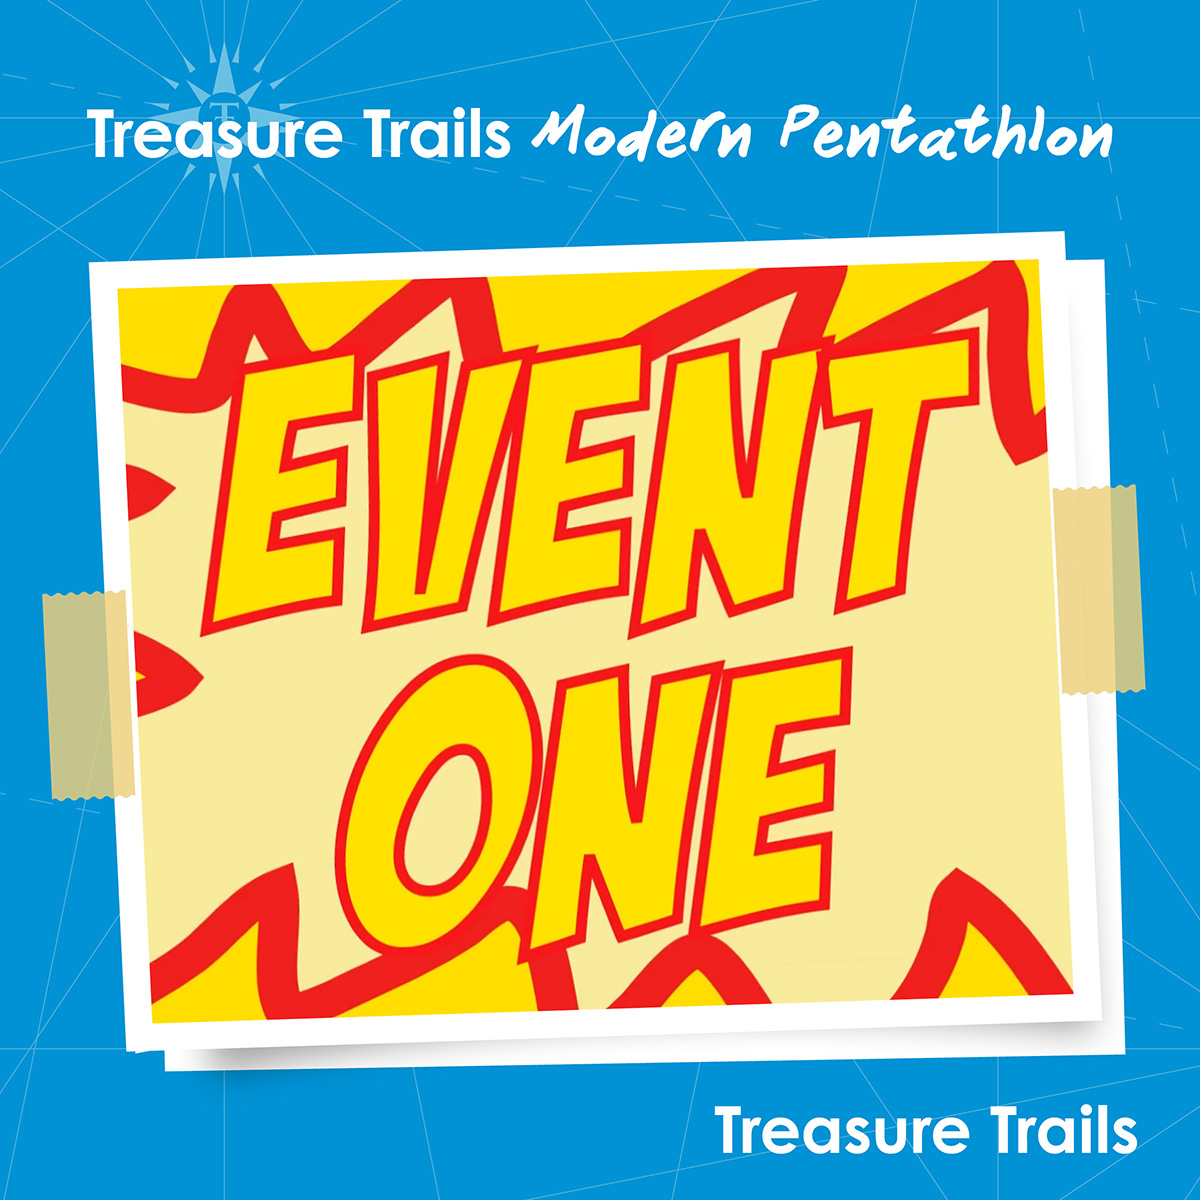 Treasure Trails modern pentathlon